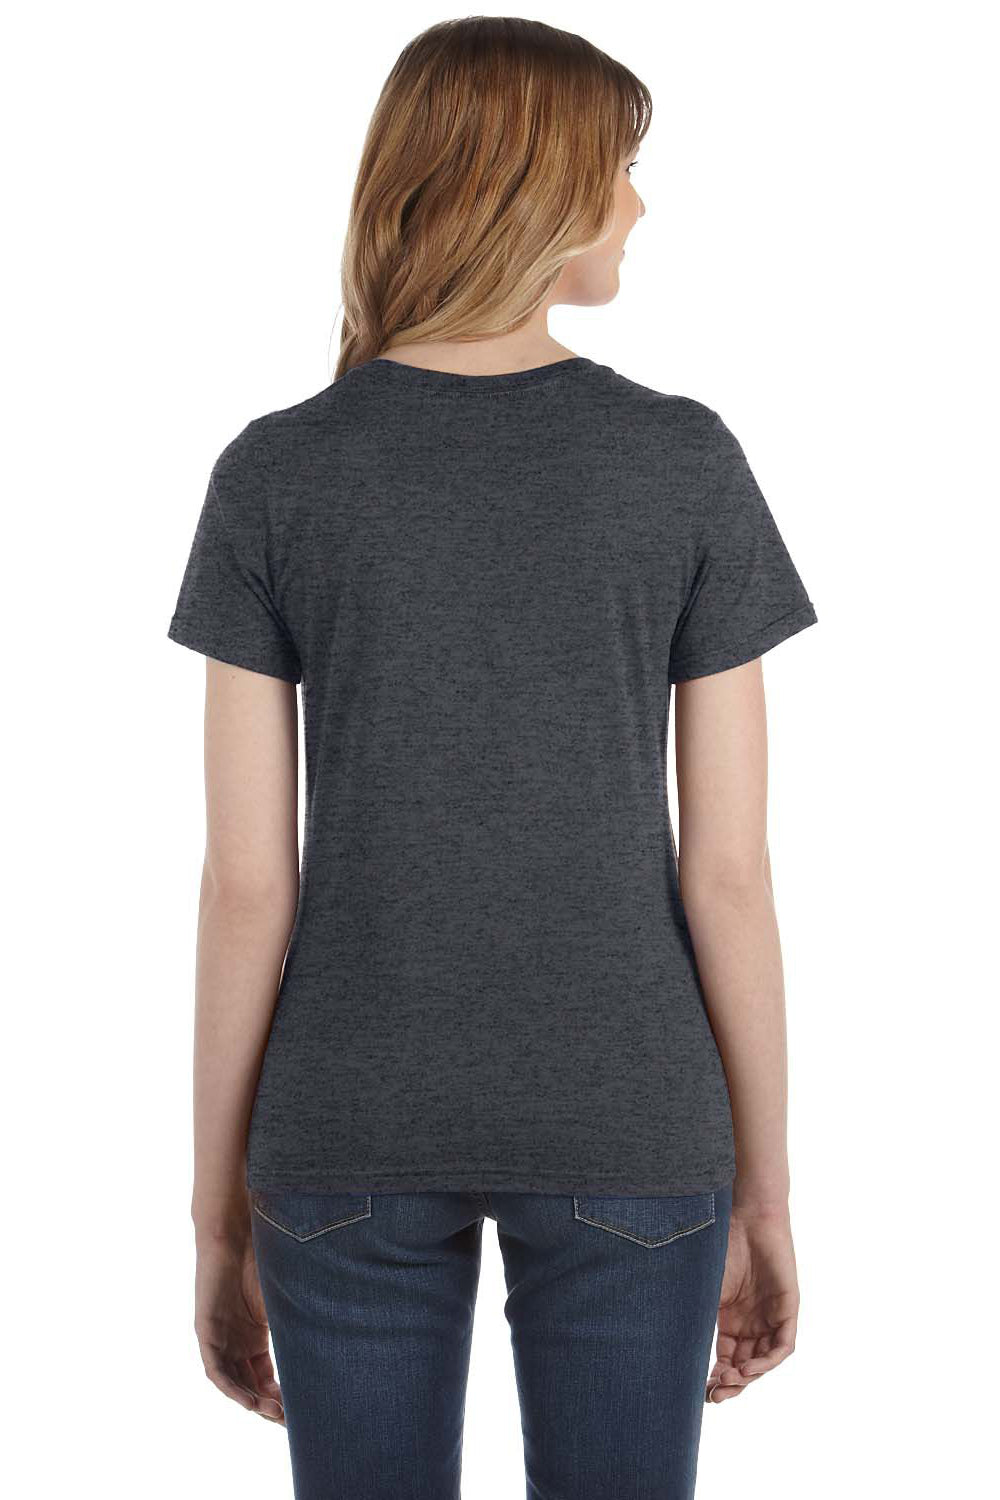 Anvil 880 Womens Short Sleeve Crewneck T-Shirt Heather Dark Grey Back